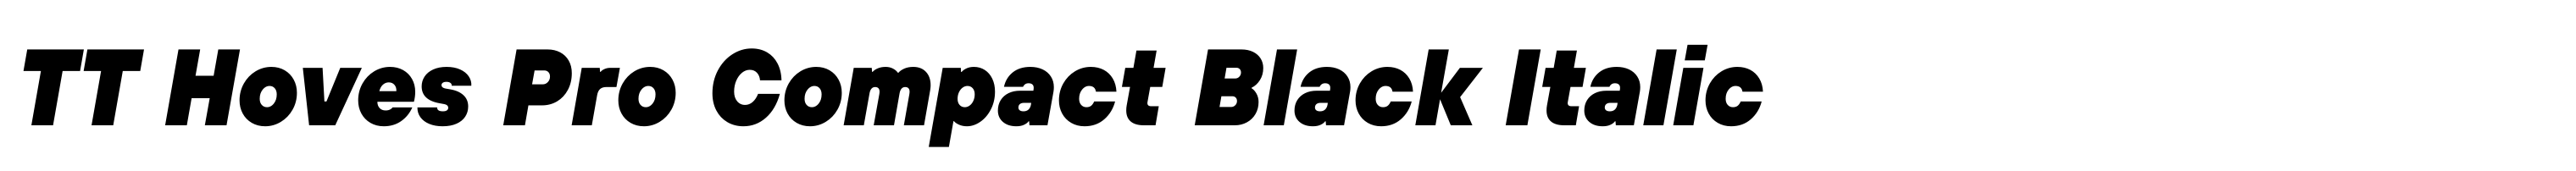 TT Hoves Pro Compact Black Italic